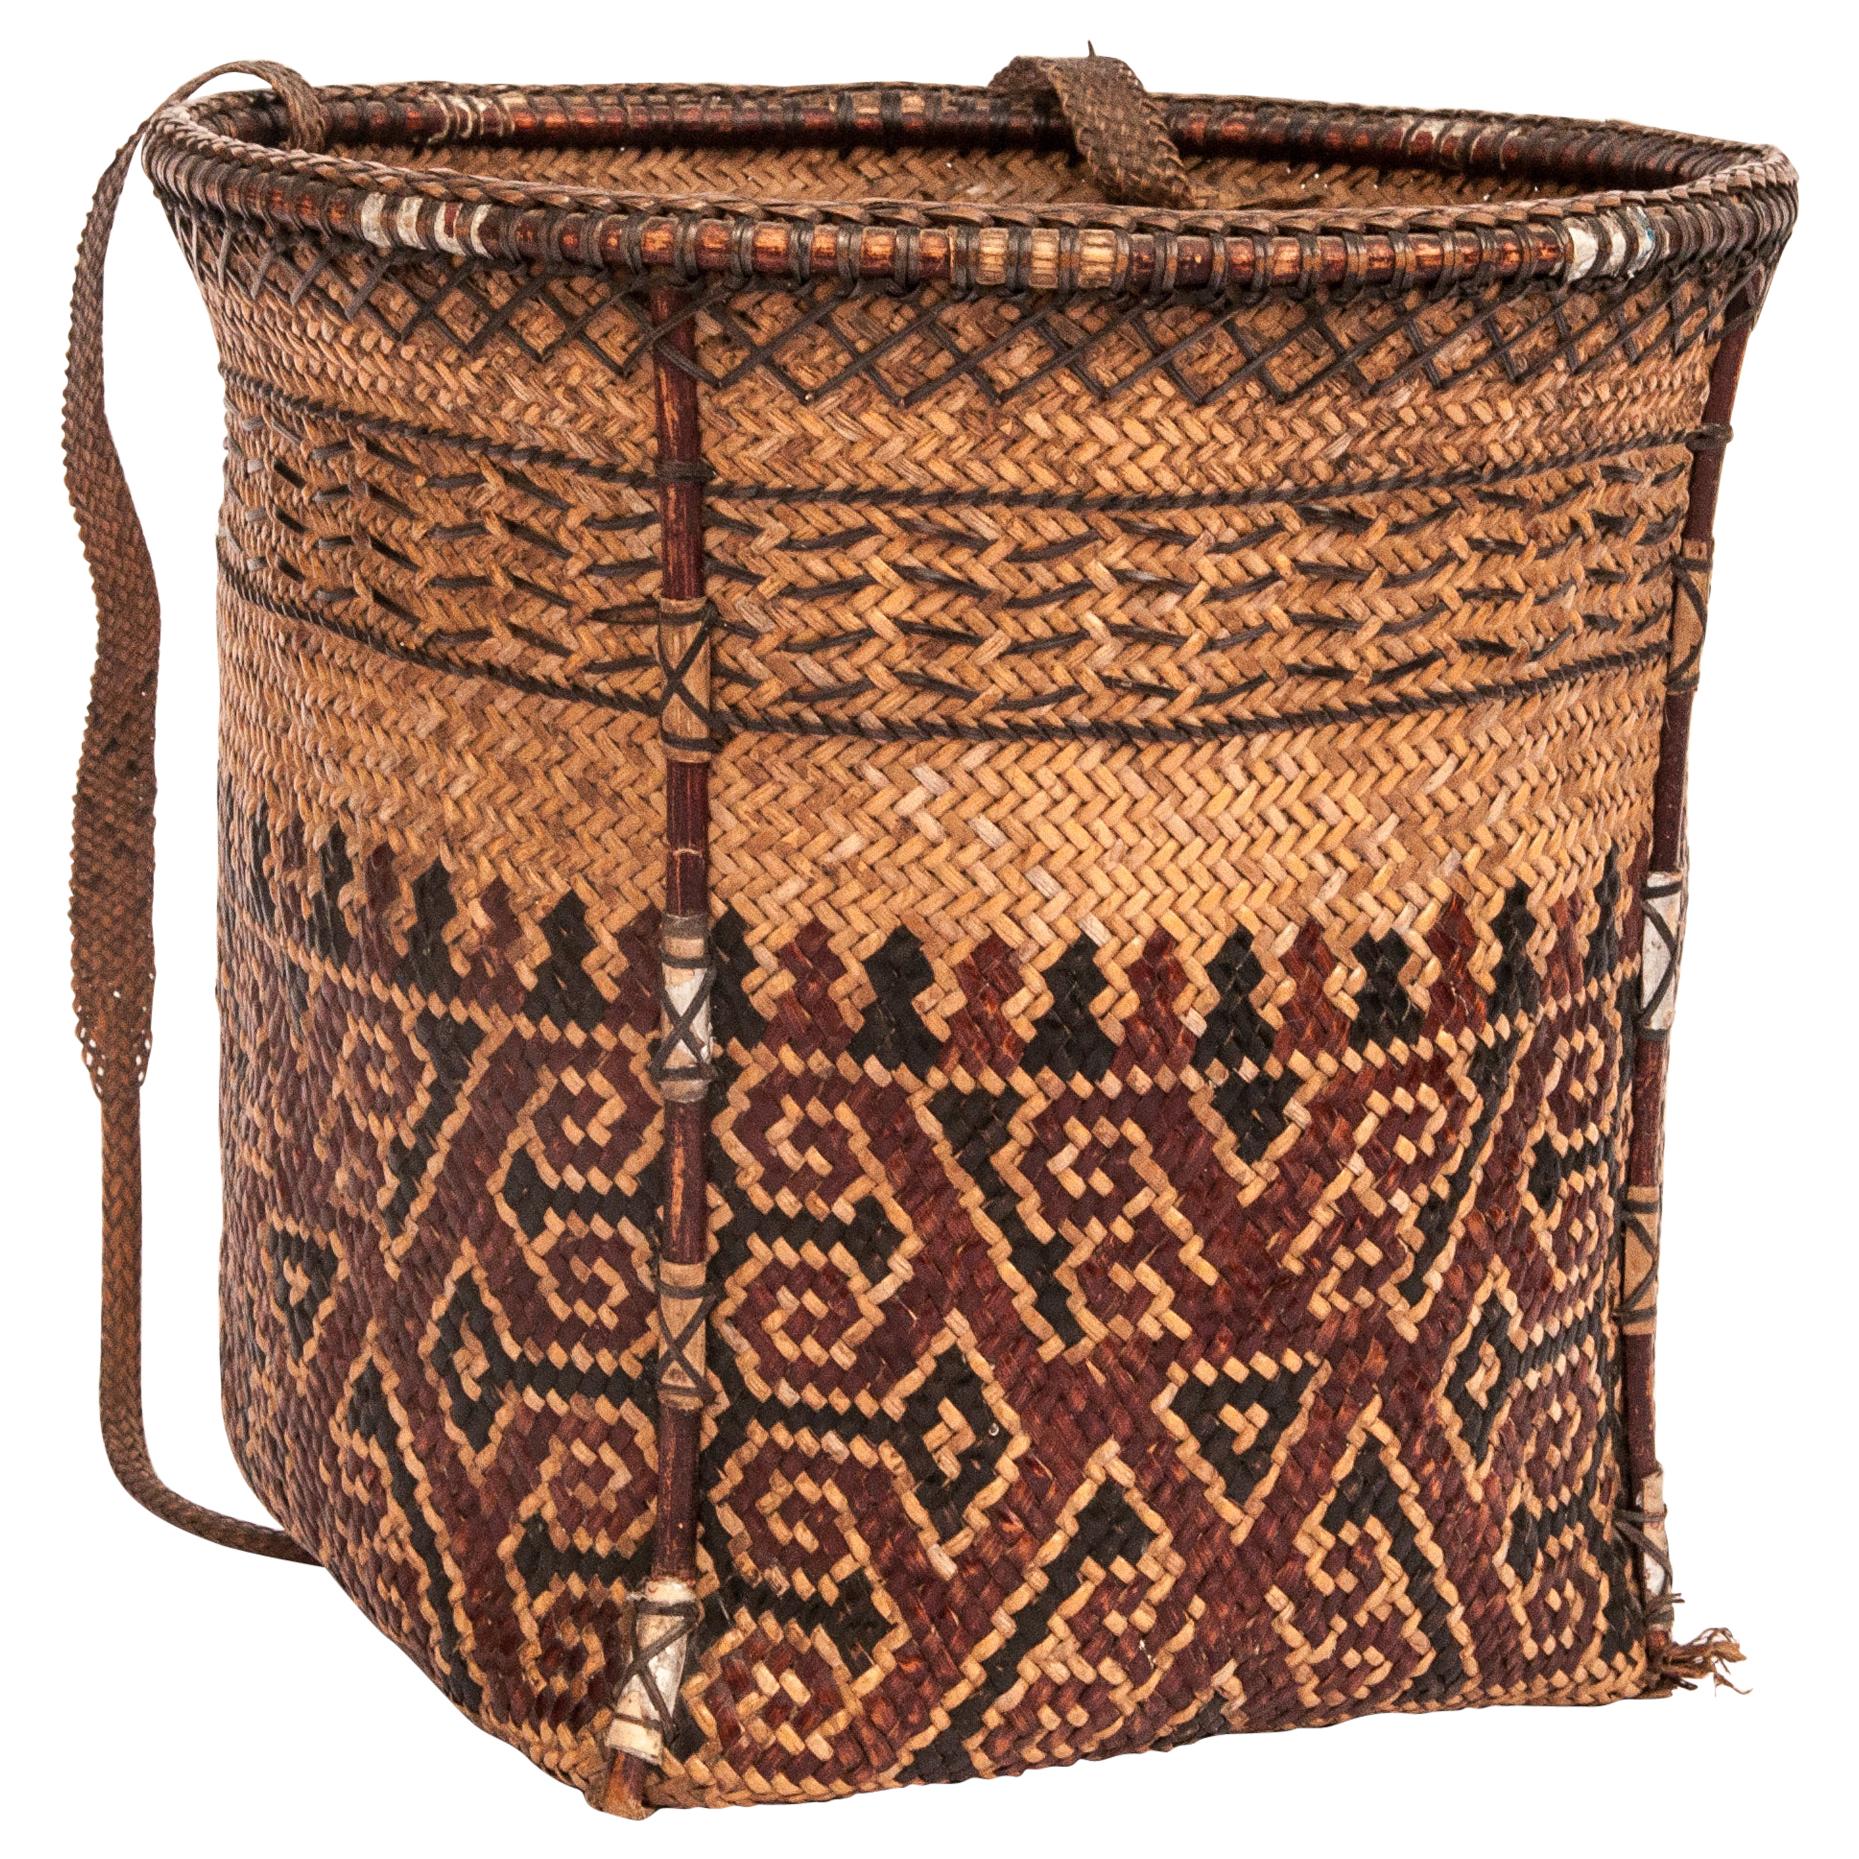 Vintage Carrying Basket Woven Design, Ngaju Dayak of Borneo, Mid-20th Century